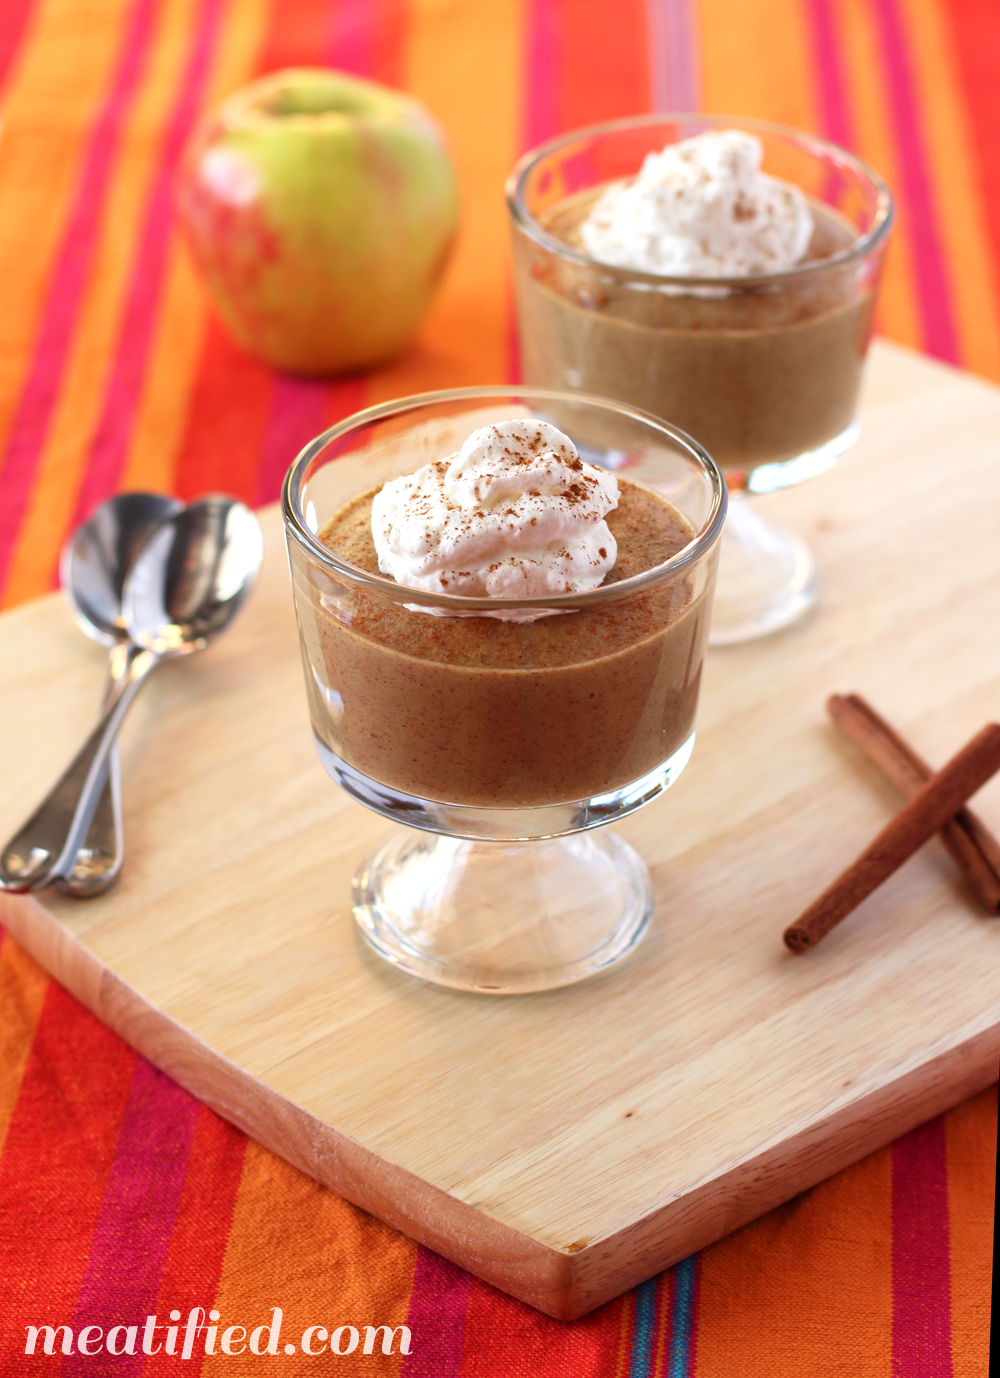 Apple Pie Pudding from http://meatified.com #paleo #dairyfree #glutenfree #pudding #pie #gelatin